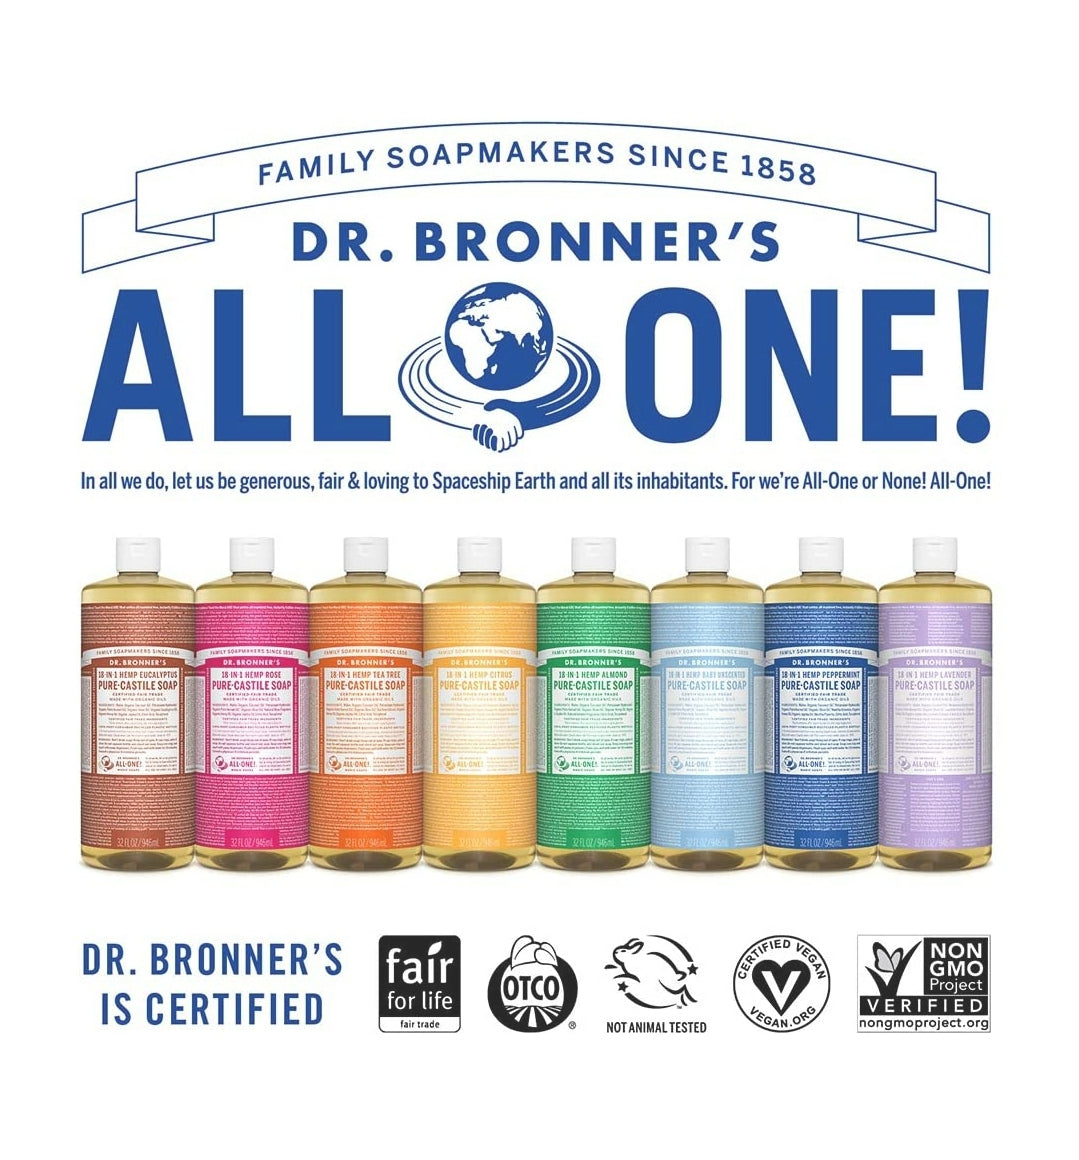 Dr. Bronner's - Pure-Castile Liquid Soap